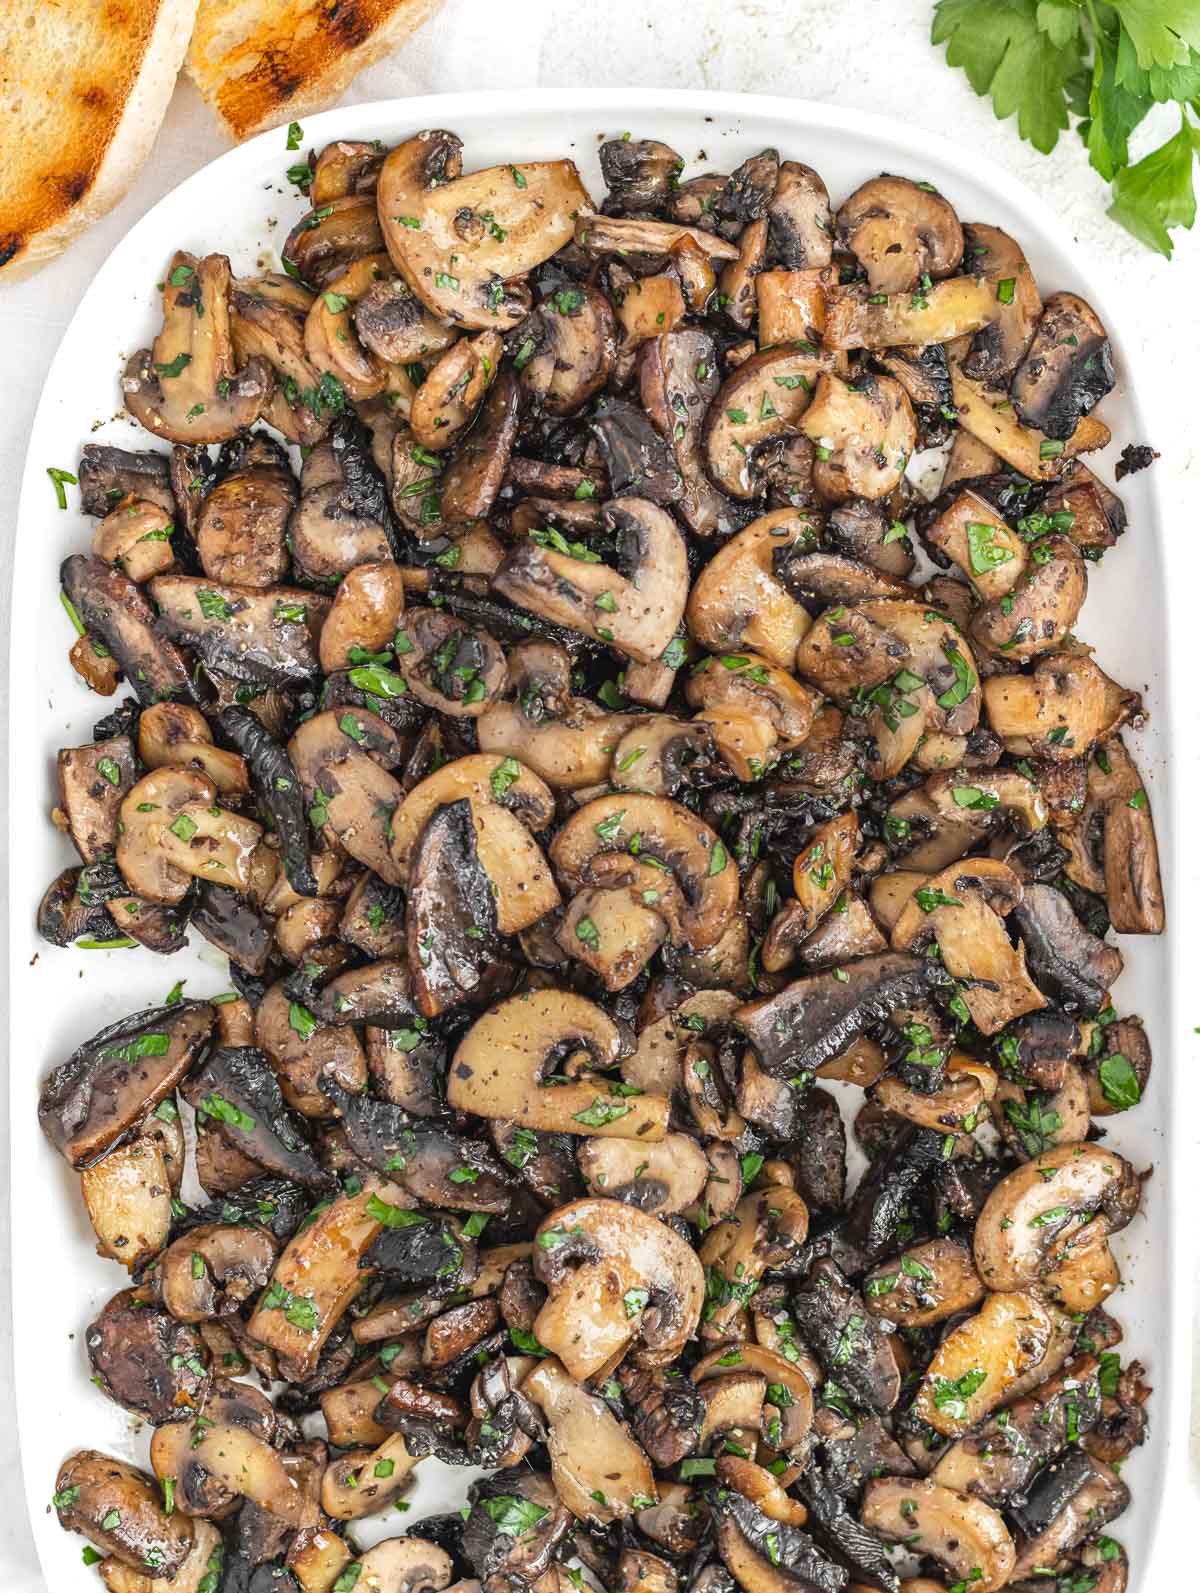 Sauteed mushrooms on a white platter